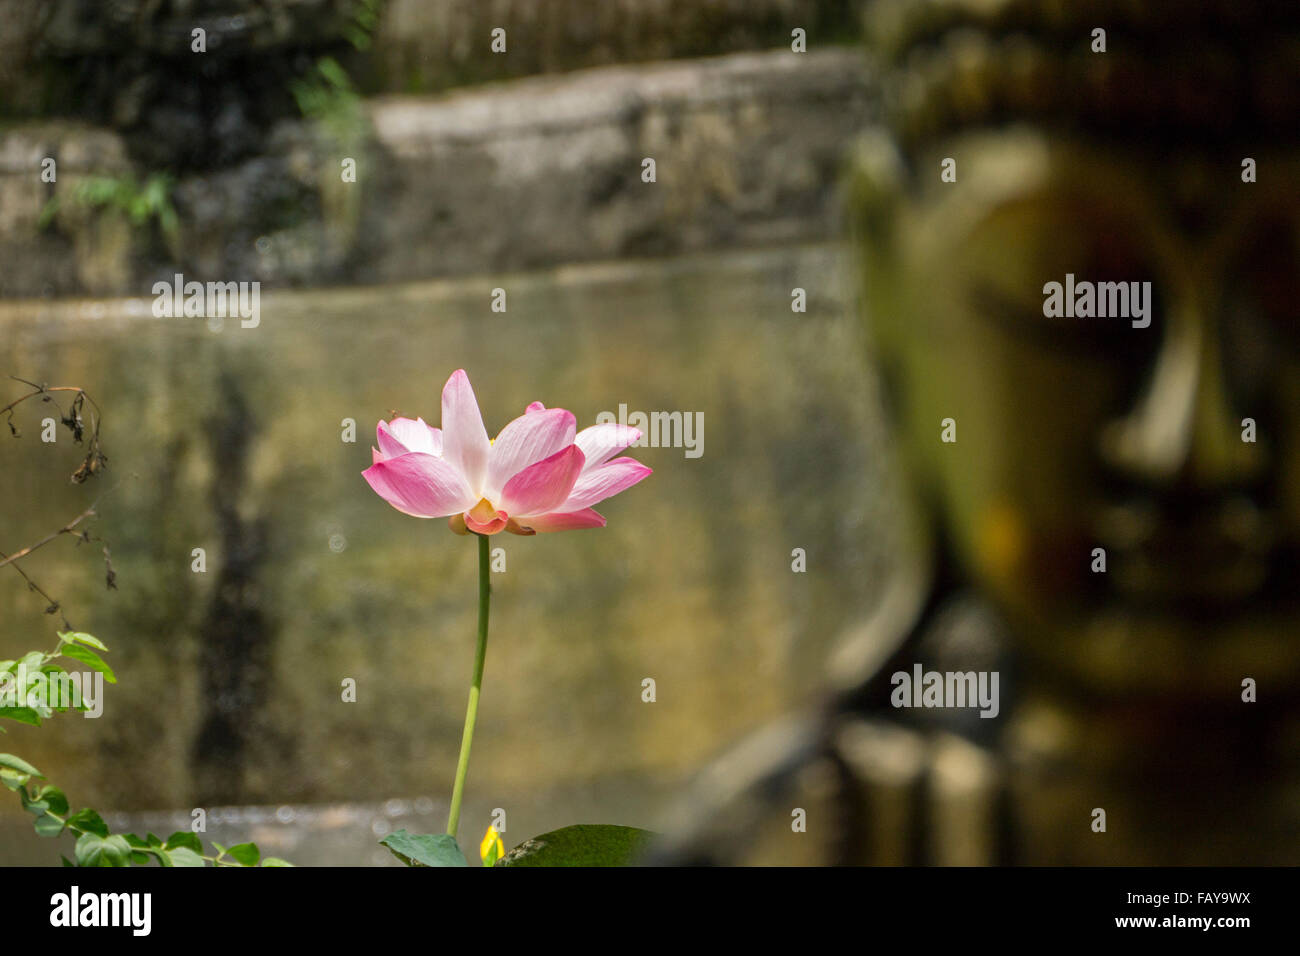 Indonesien, Tejakula, Bali, Lotus-Blume in der Nähe von Buddha-statue Stockfoto